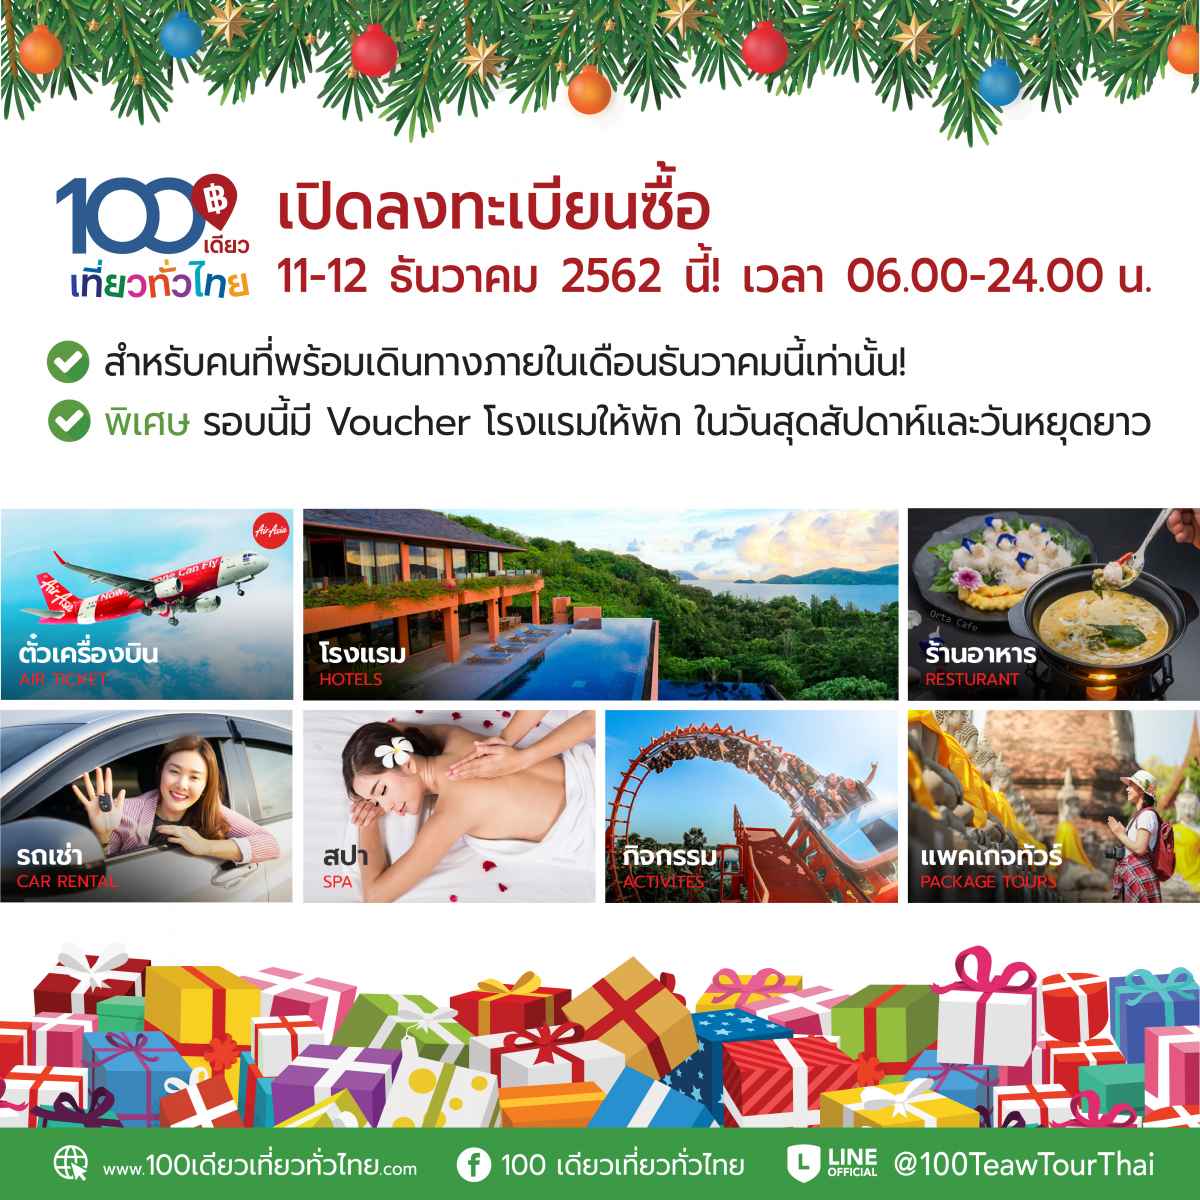 100 baht Travel